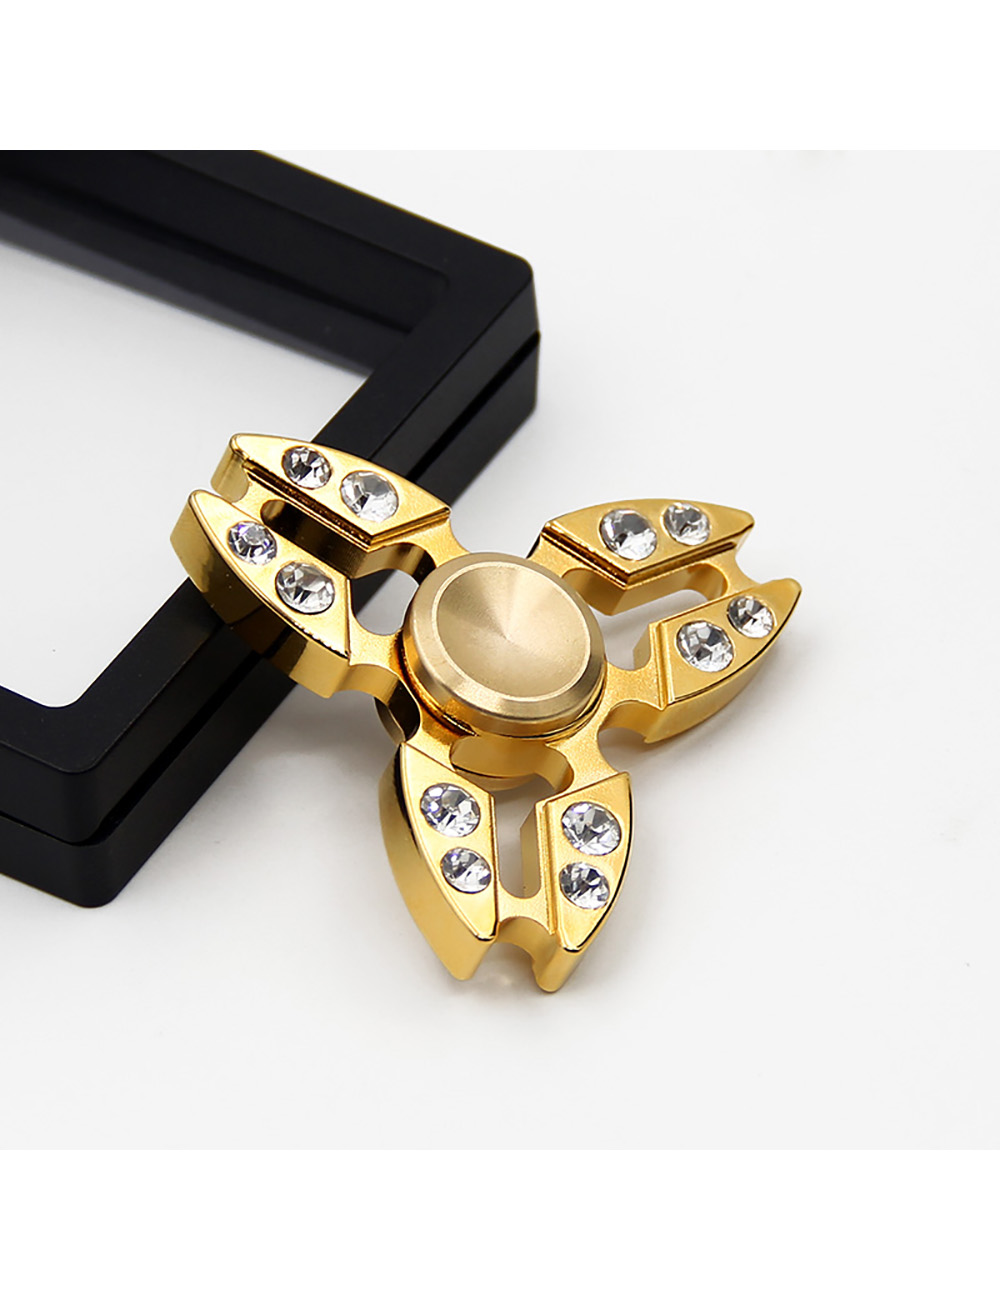 diamond fidget spinner with 24kt gold platin